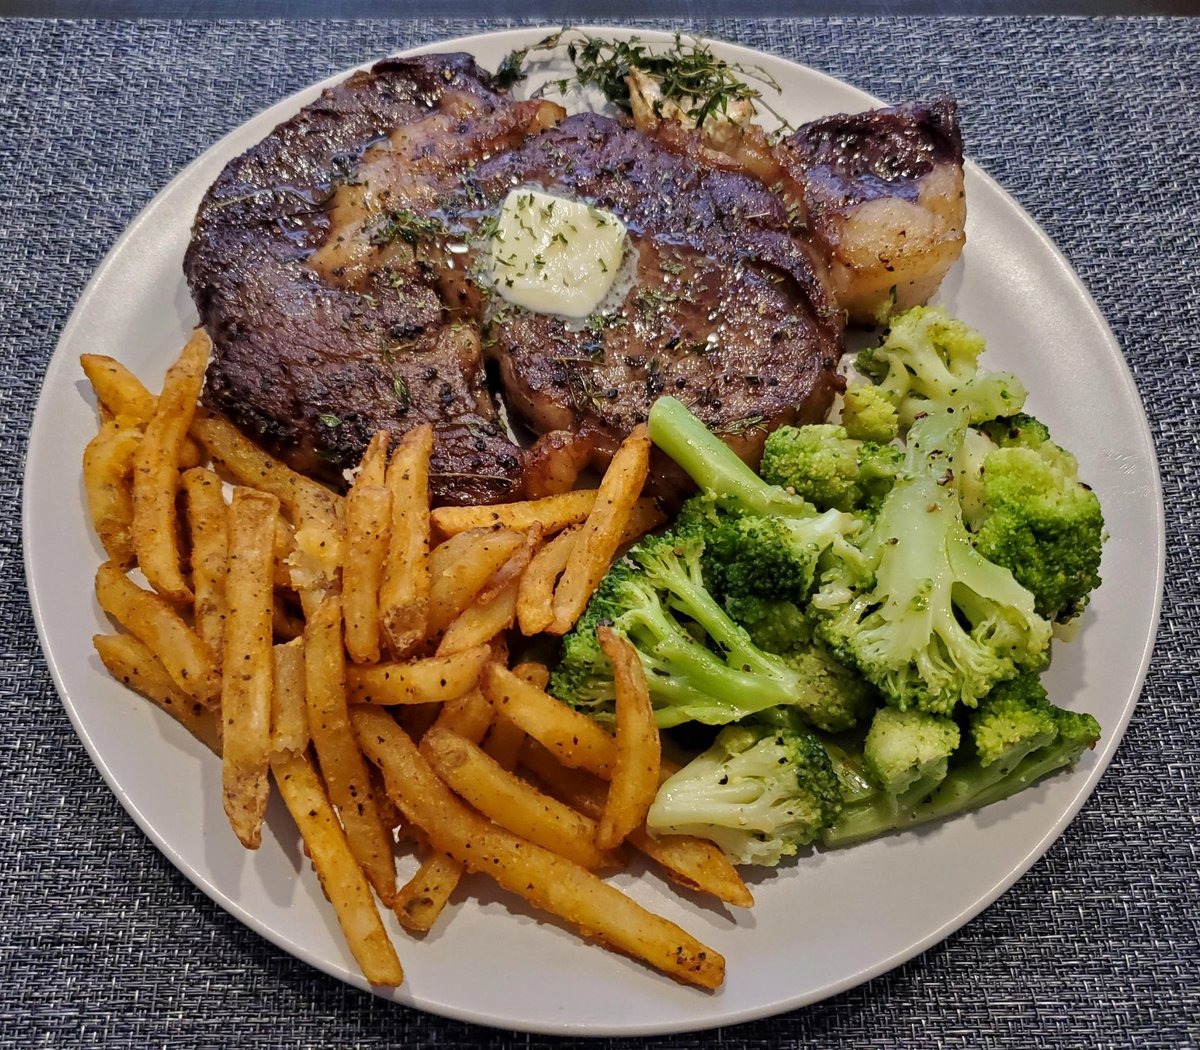 Steak, Fries, and Broccoli 🥩 🍟 🥦